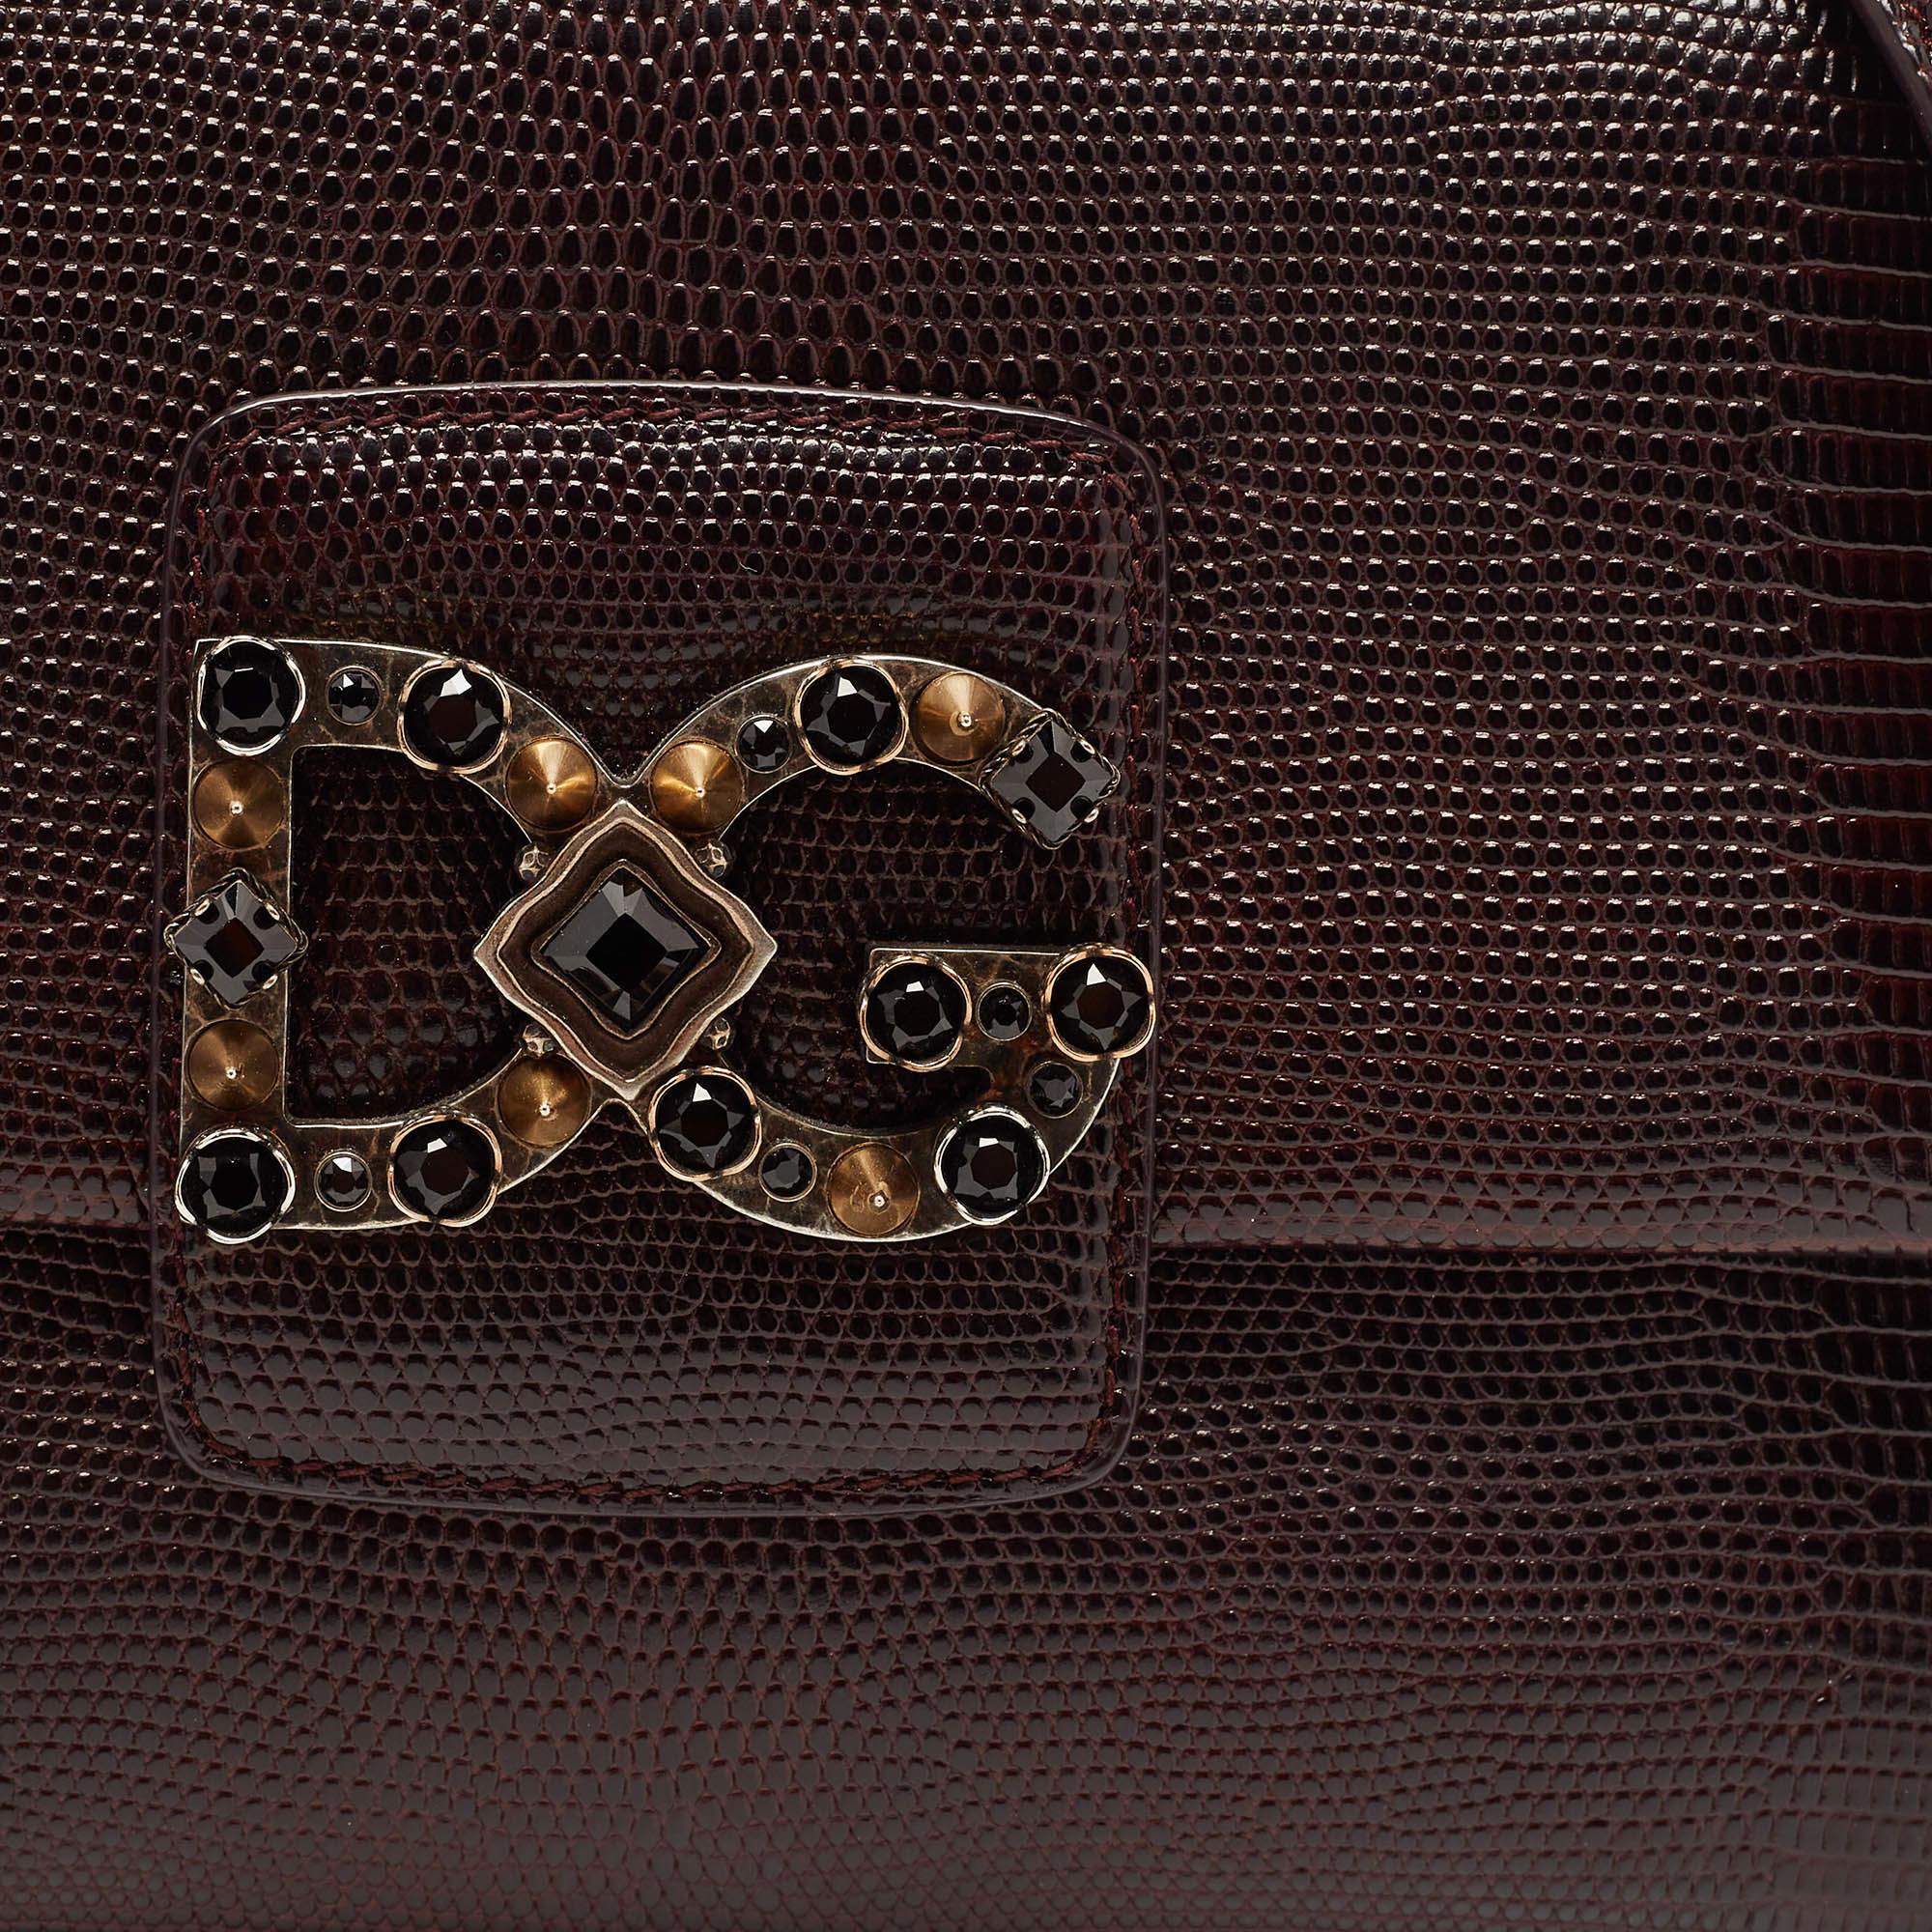 Dolce & Gabbana Dark Burgundy Lizard Embossed Leather DG Millennials Shoulder Ba 3